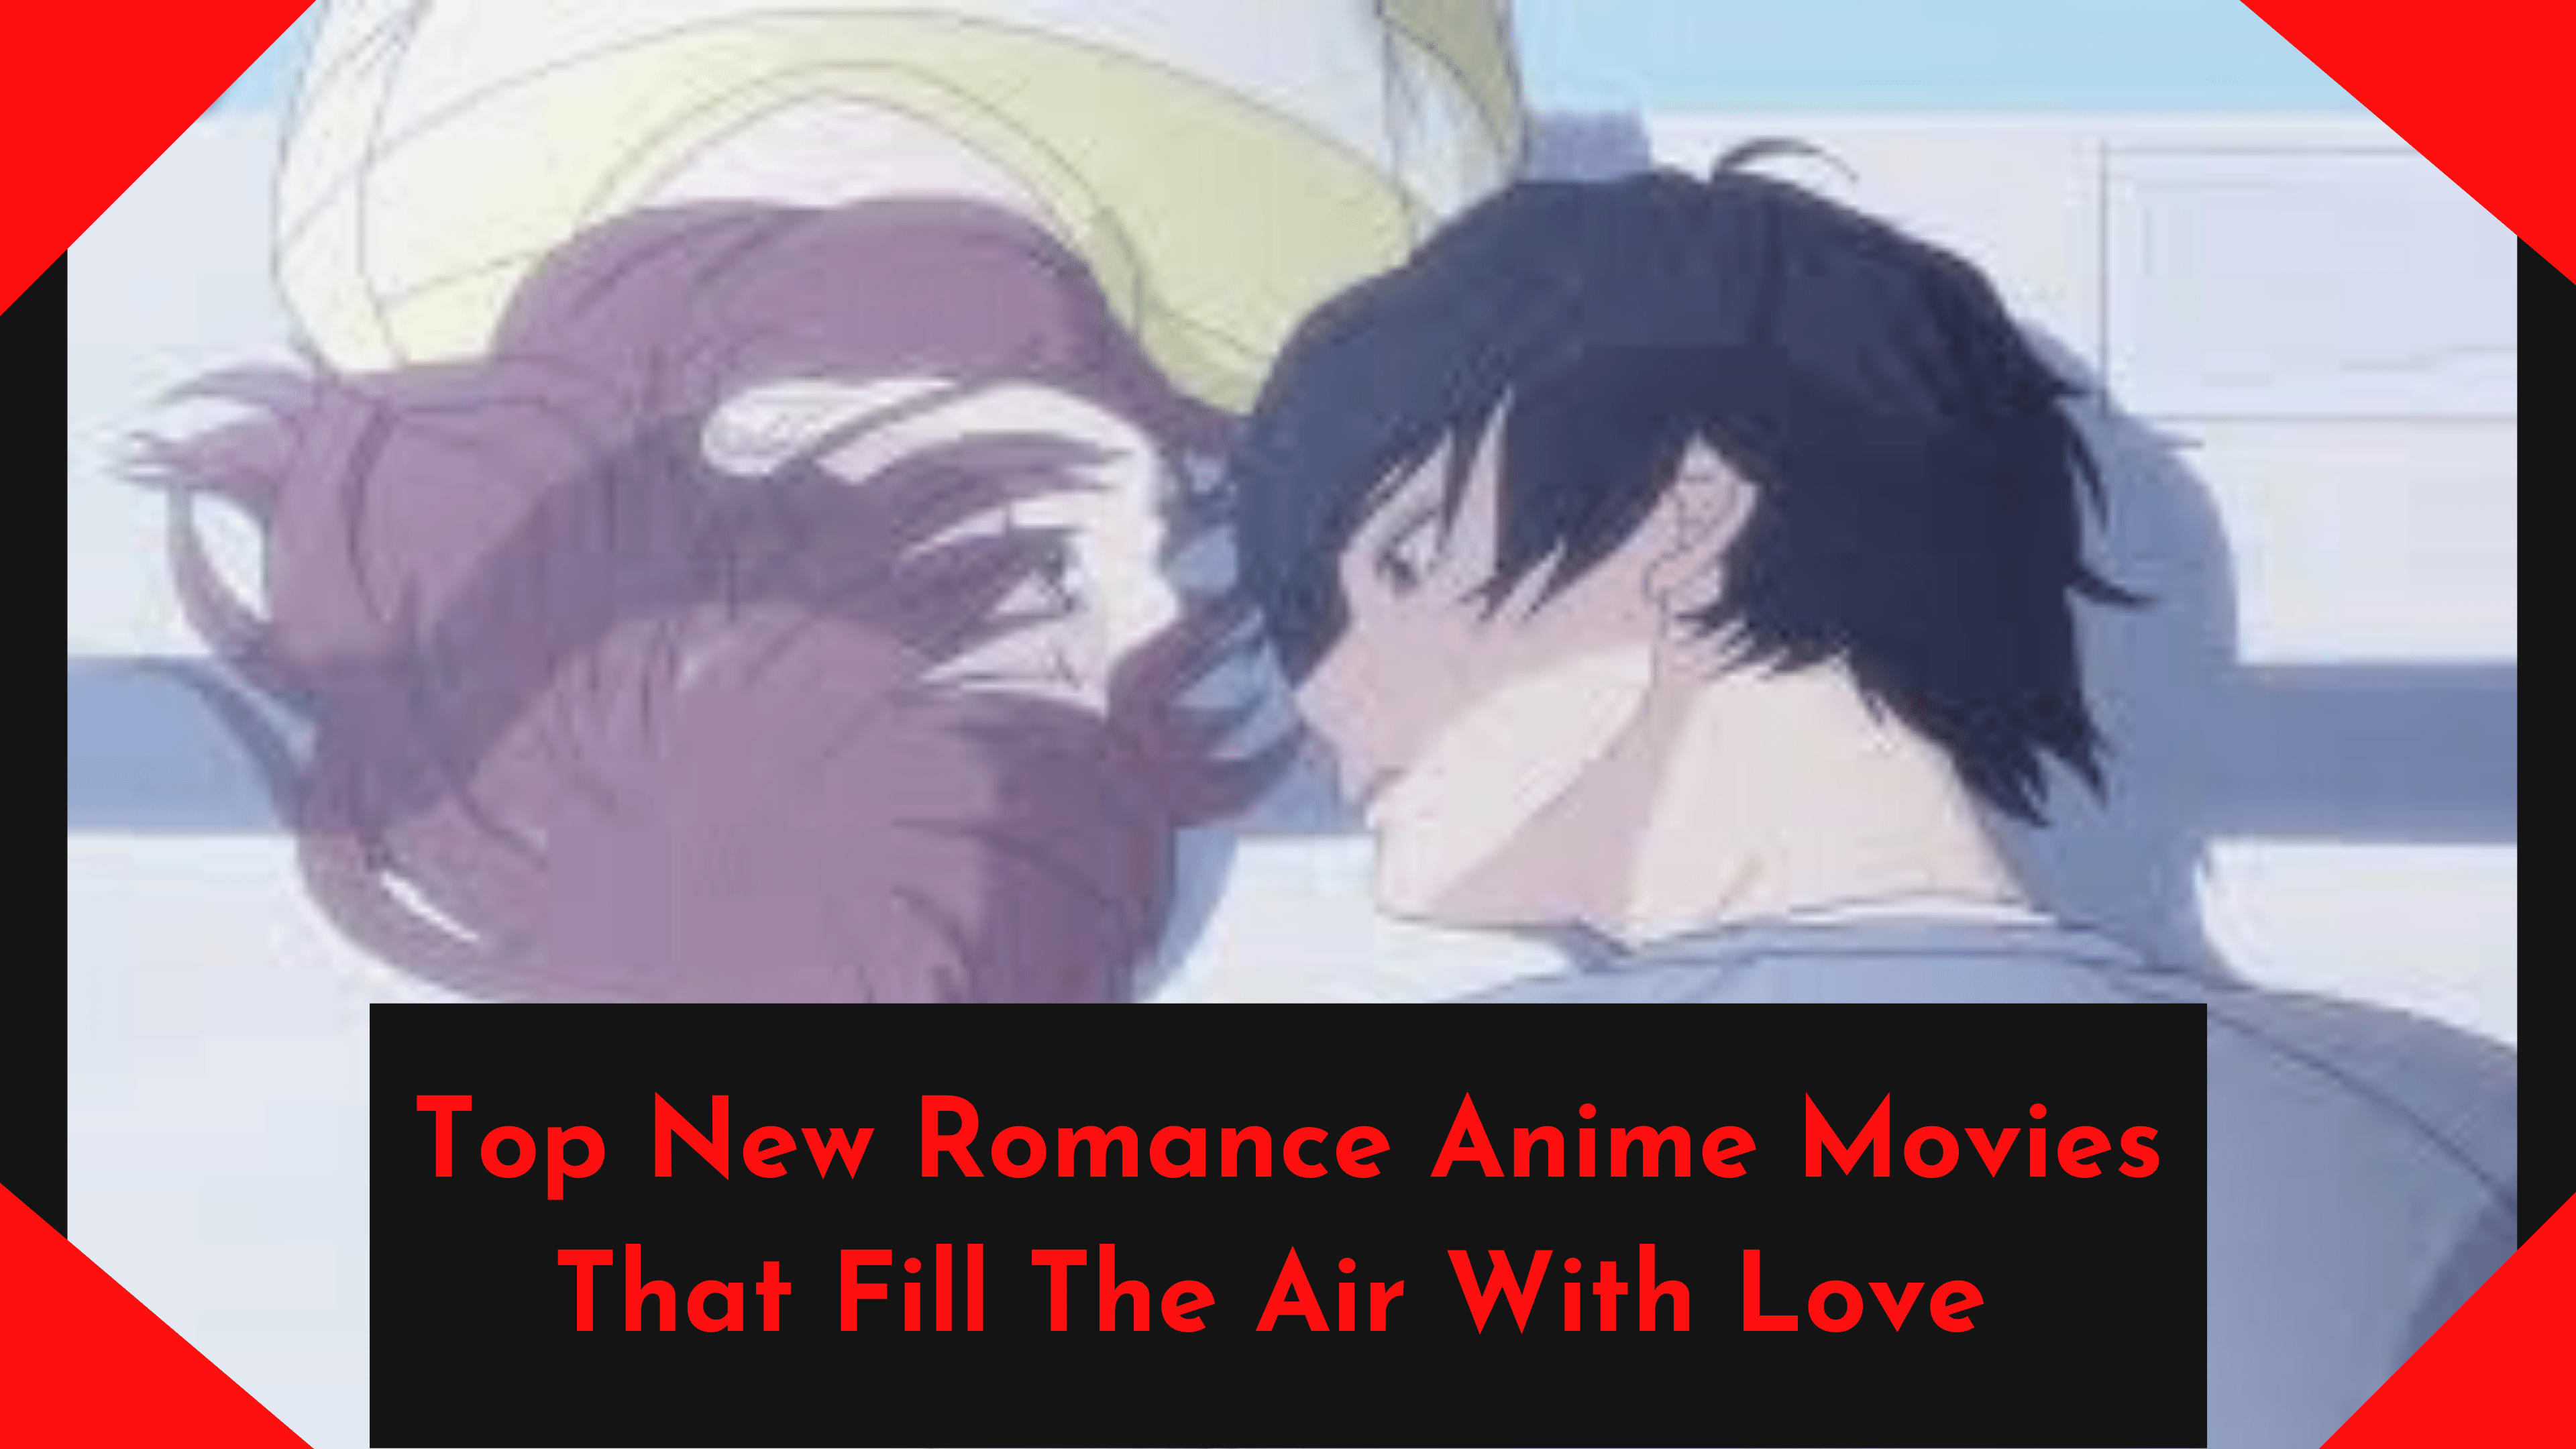 Bikin Iri Ini 7 Rekomendasi Anime Movie Romance Terbaik Sepanjang Masa   Dafundacom